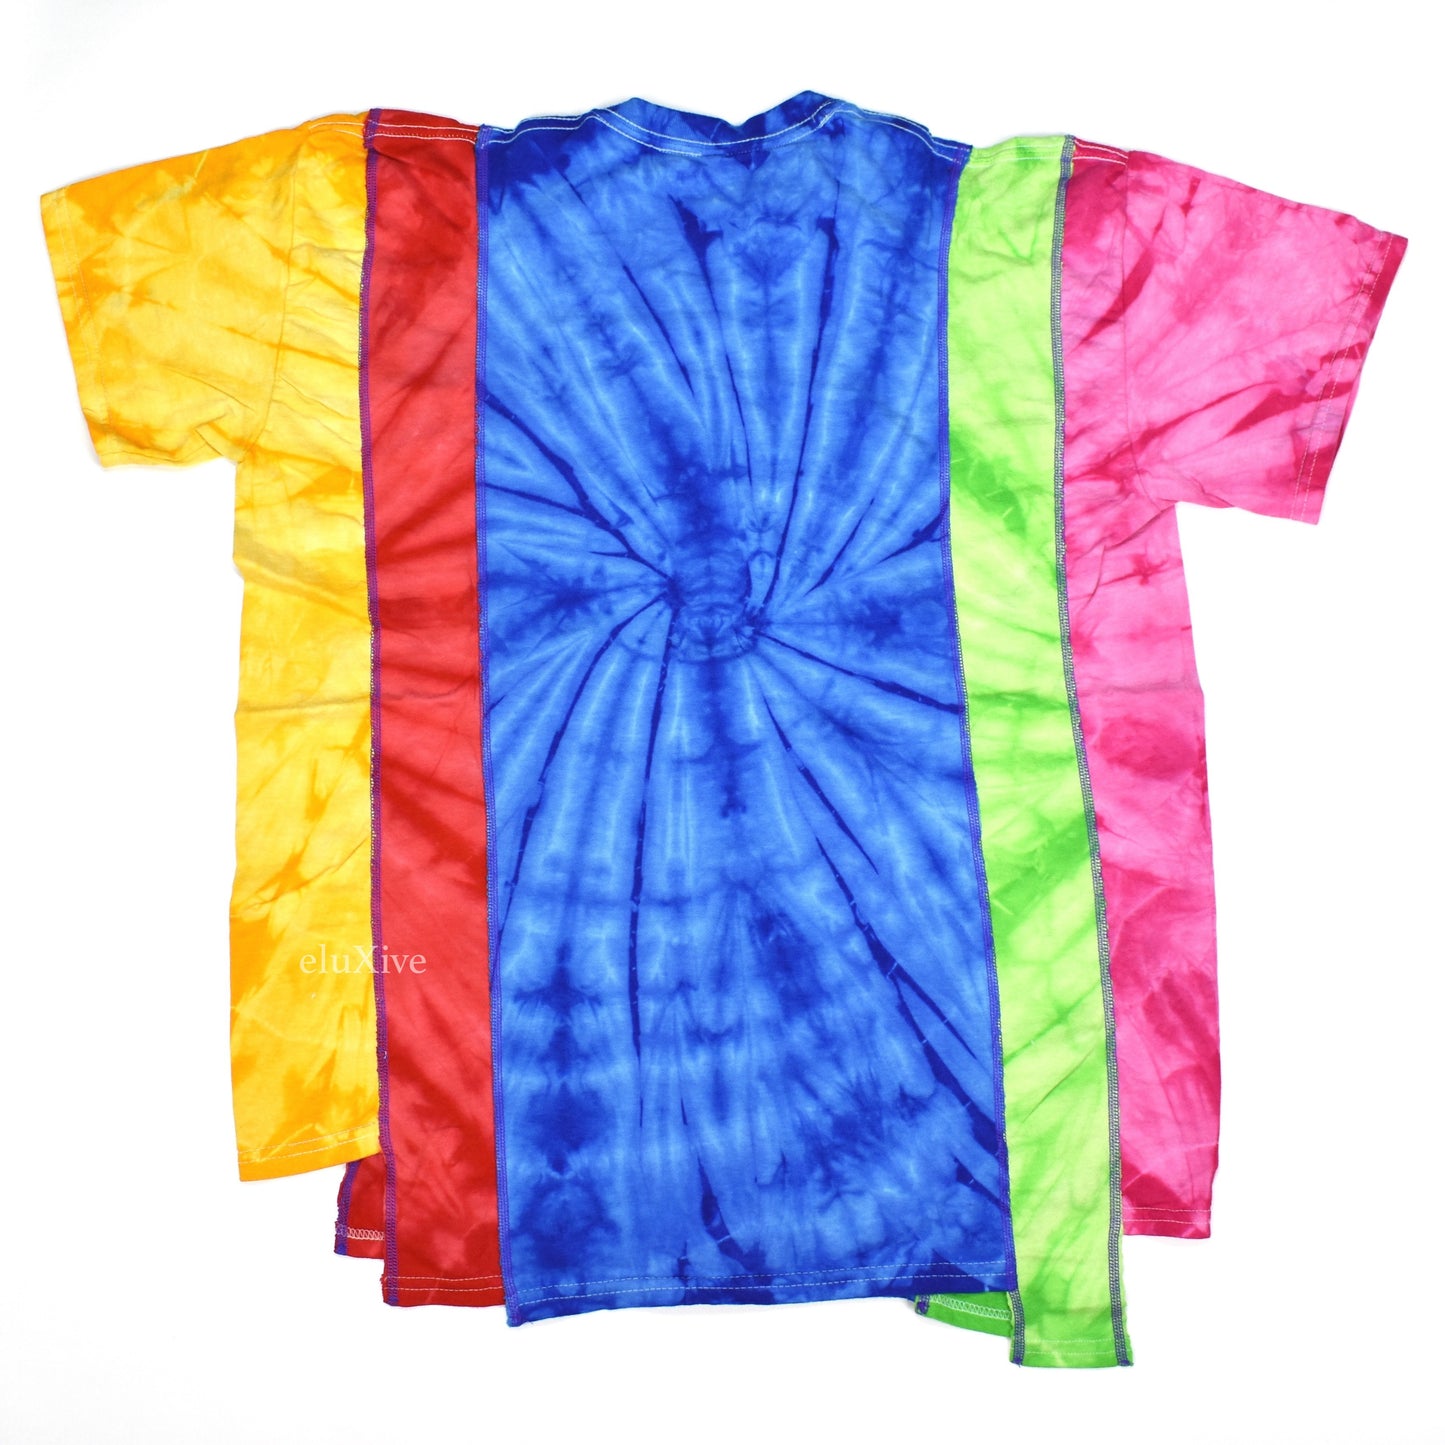 Needles - 5-Cut Tie-Dye T-Shirt